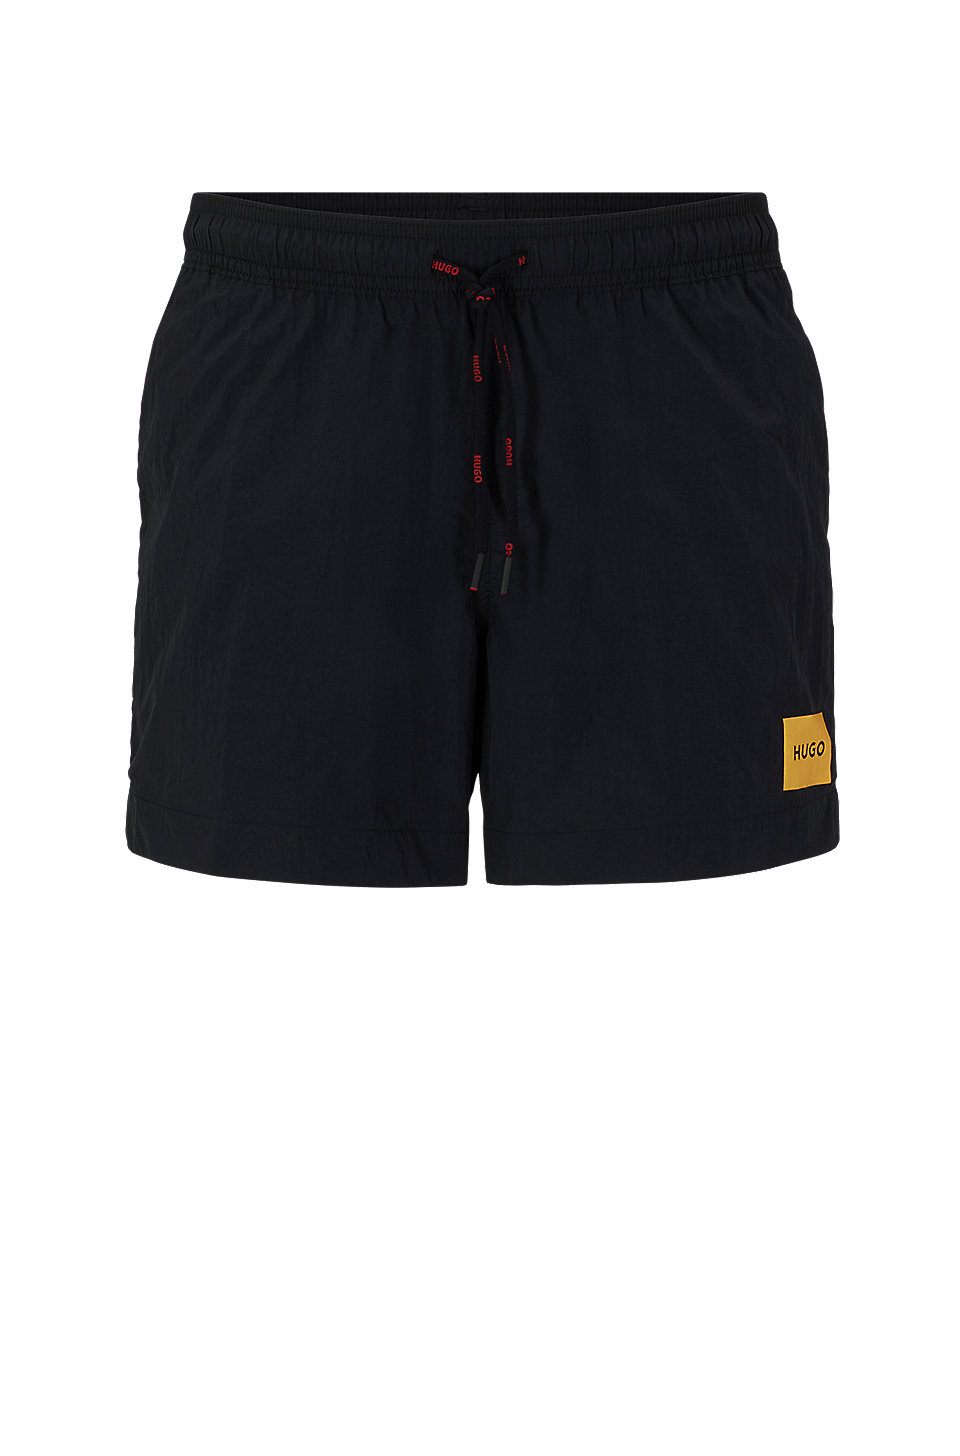 HUGO - Quick-dry swim shorts with red logo label